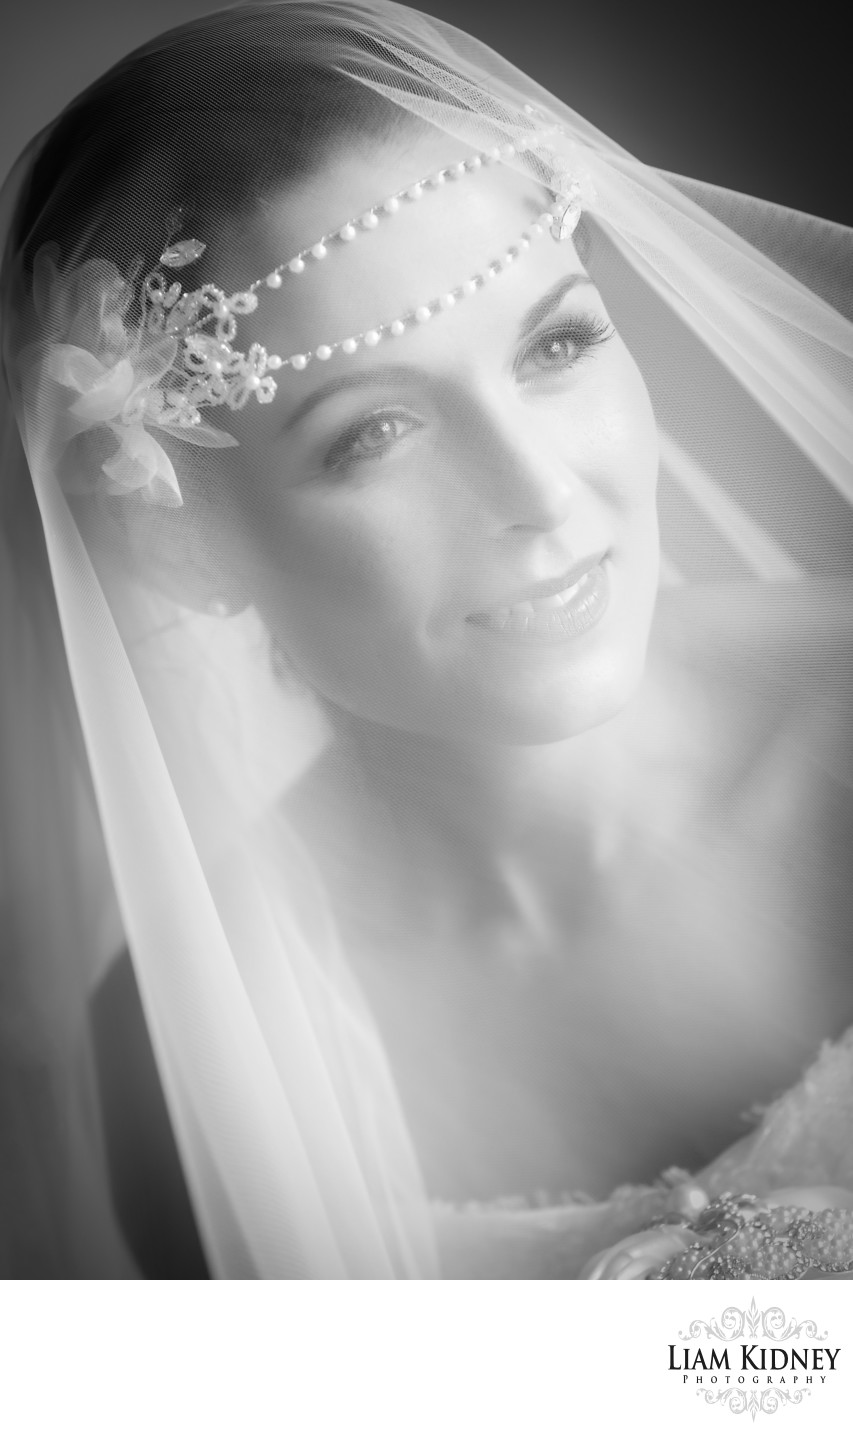 Beautiful Bridal Photography